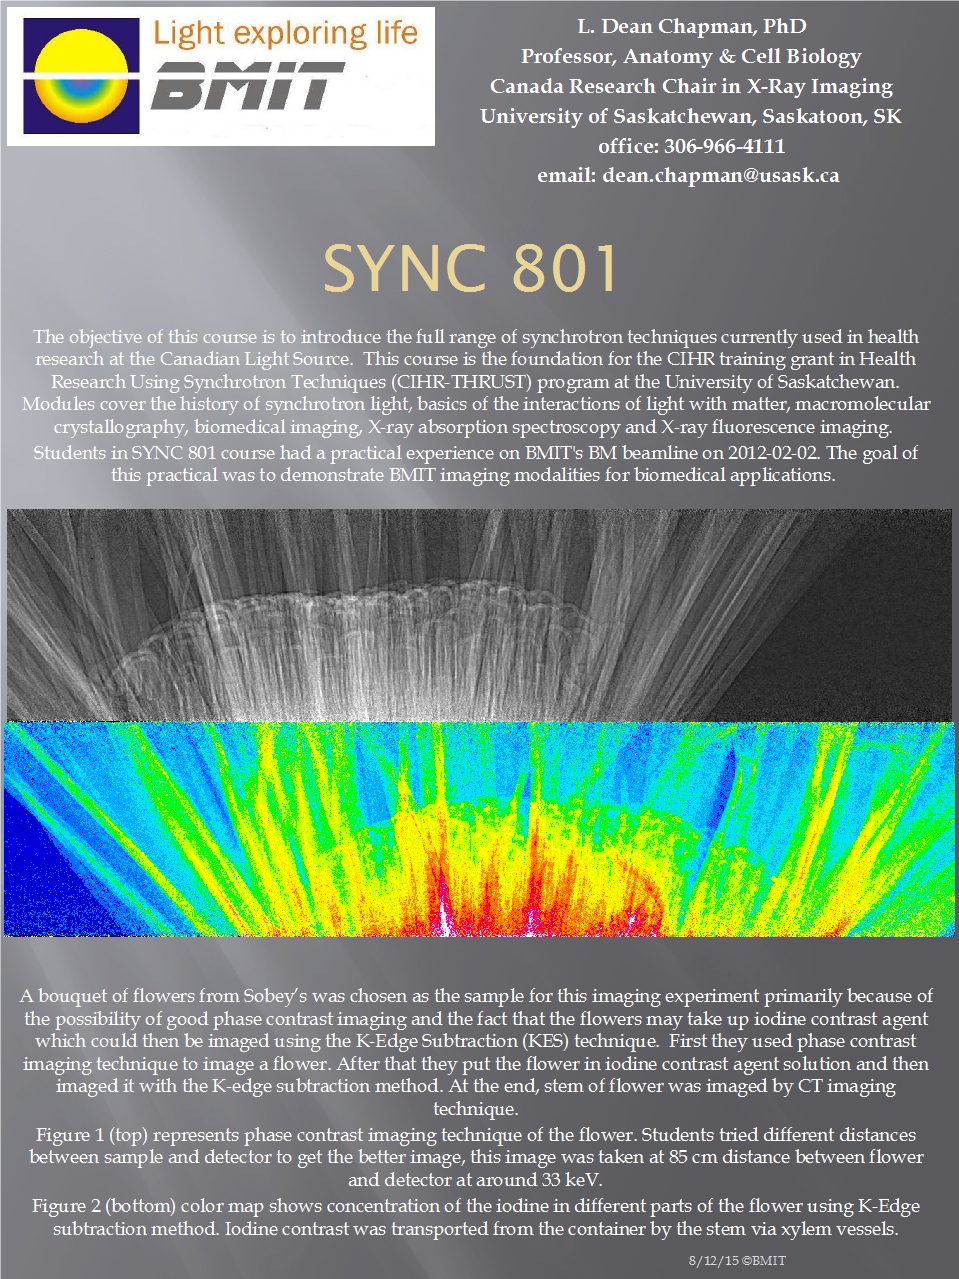 SYNC 801 Image